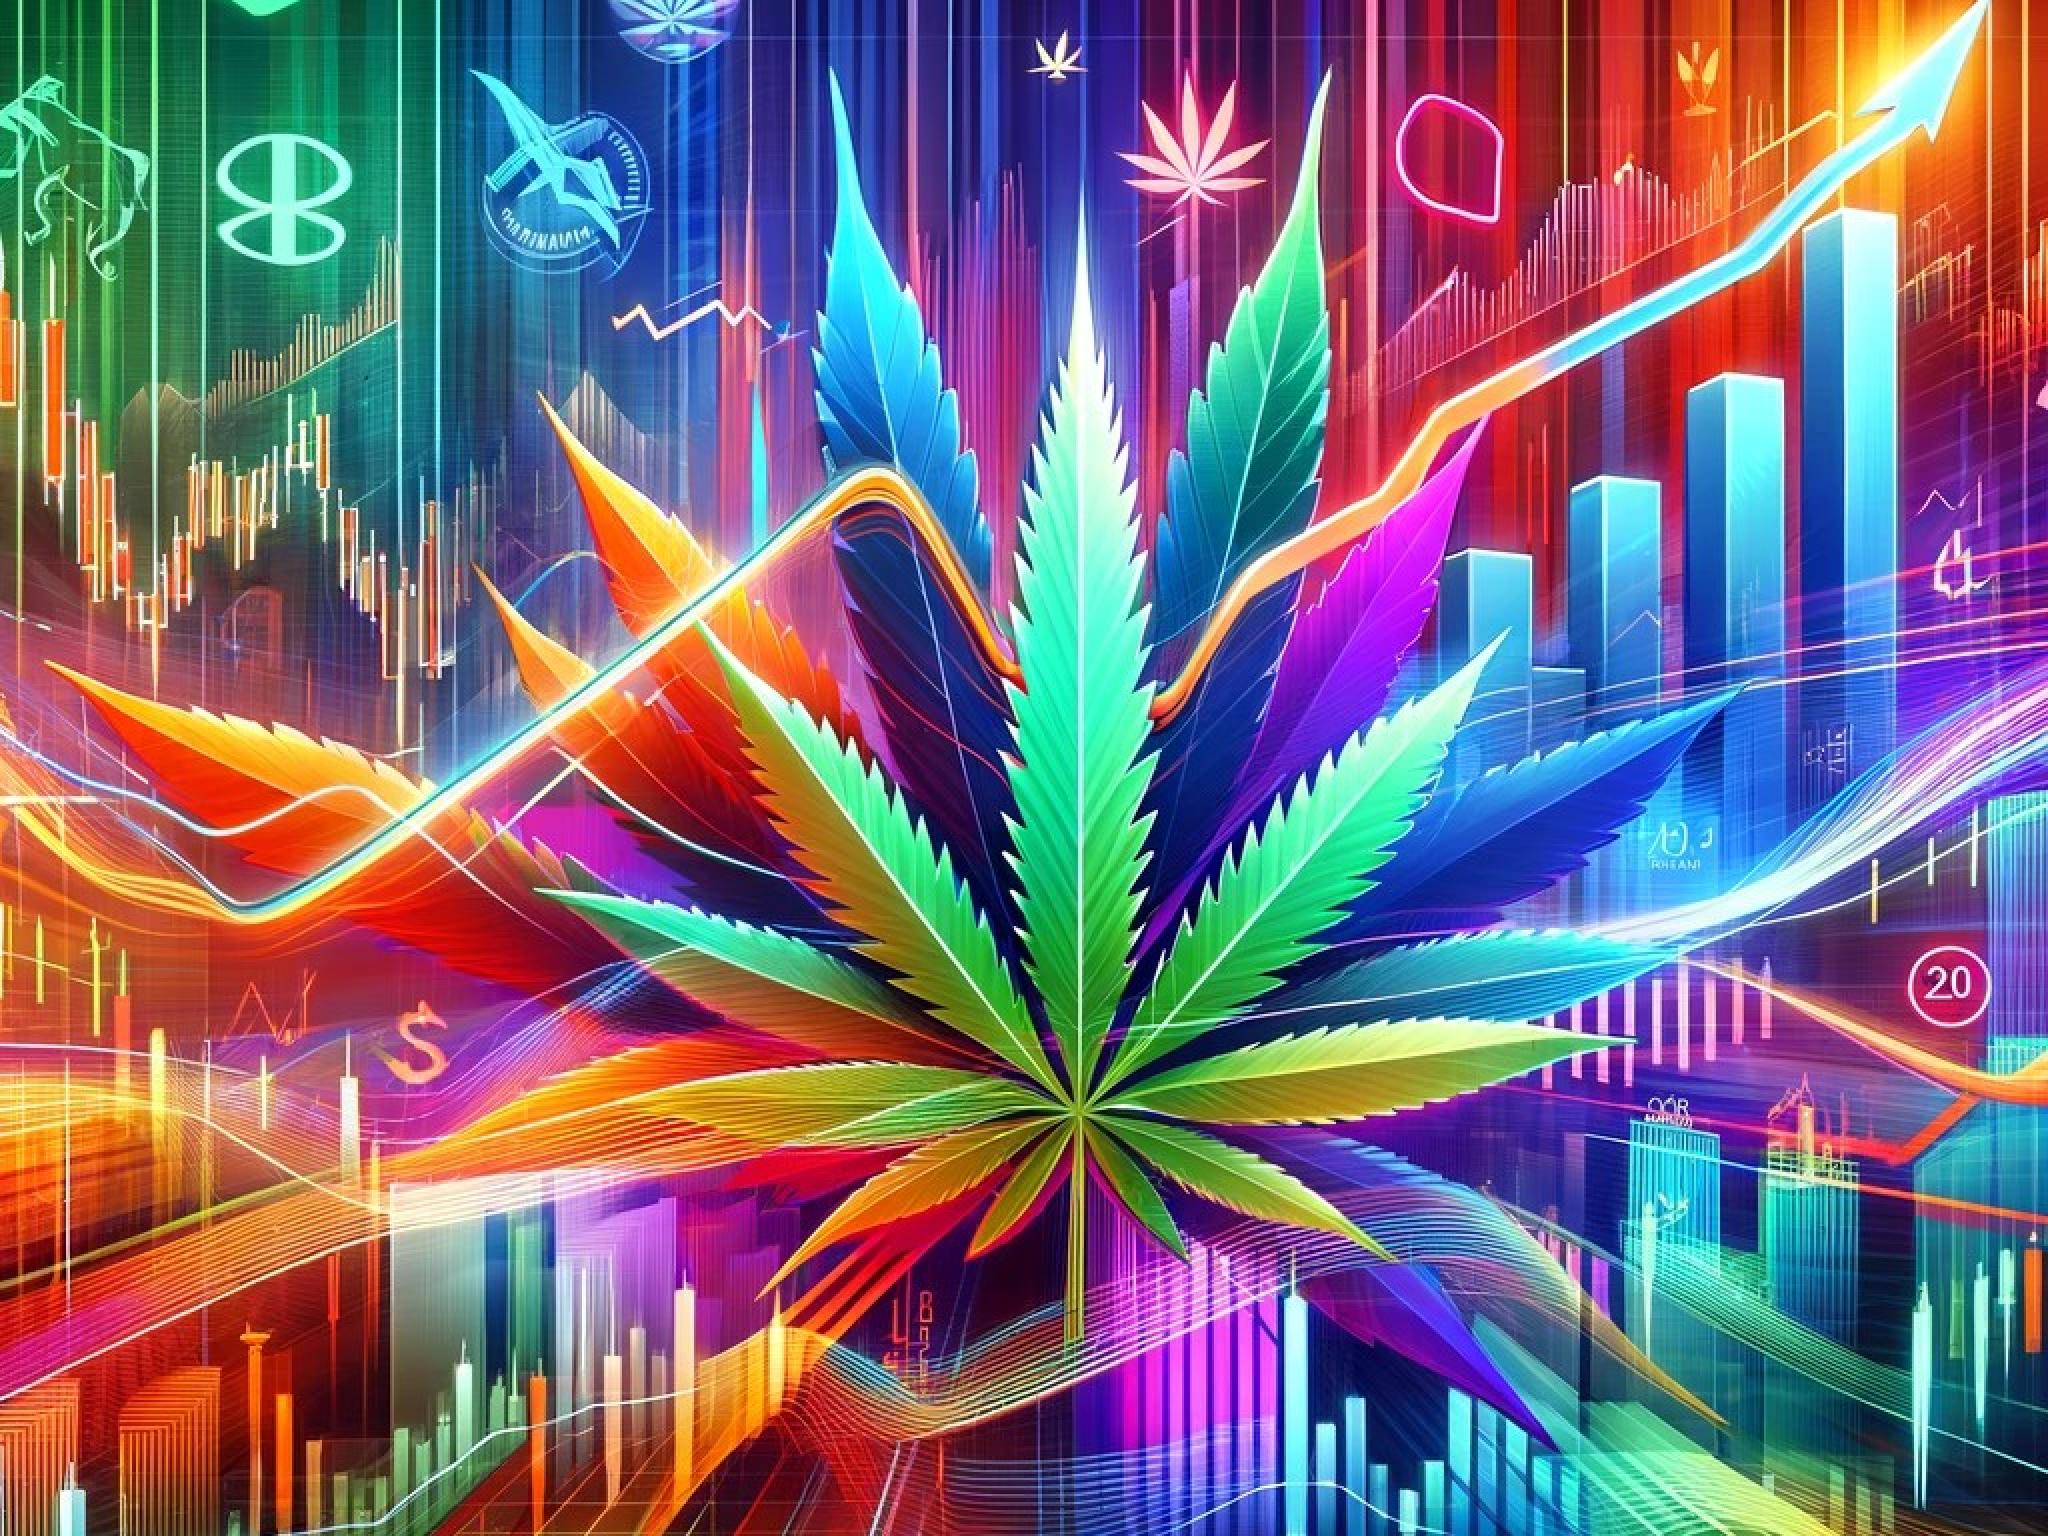  cannabis-stocks-react-to-dea-rescheduling-canopy--aurora-surge-tilray-wm-tech-hold-steady 